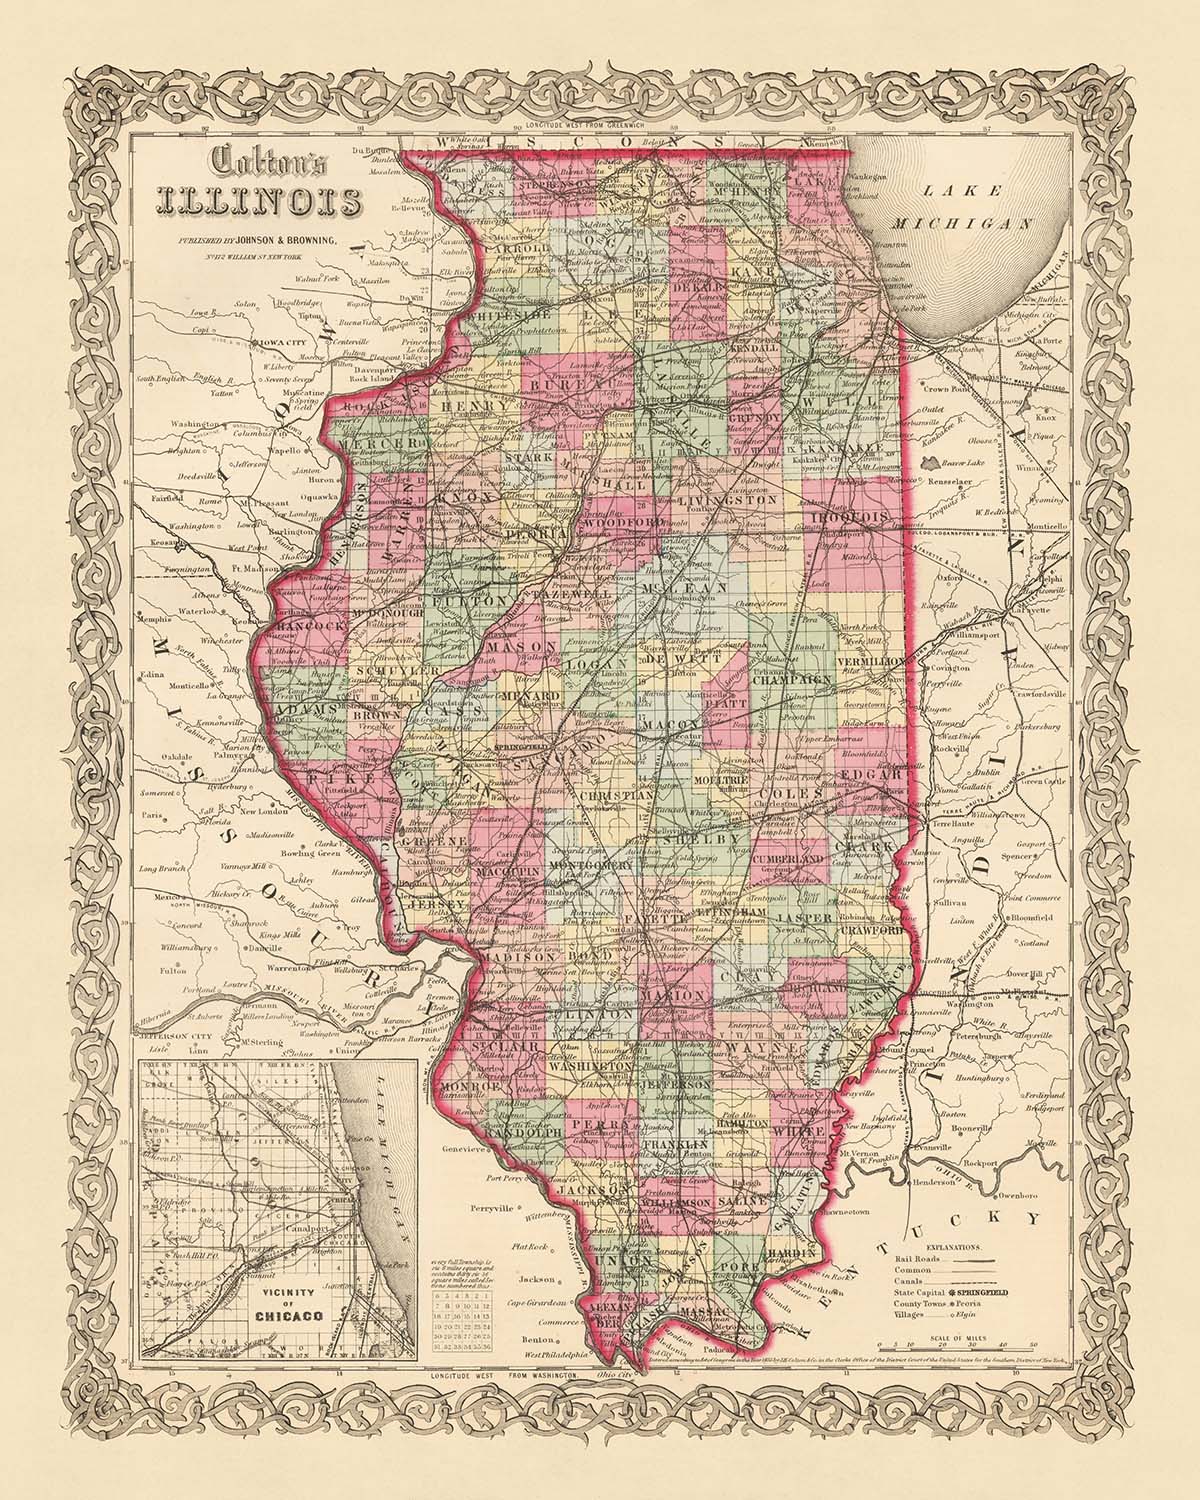 Ancienne carte de l'Illinois par JH Colton, 1855 : Chicago, Peoria, Springfield, Galena, Quincy